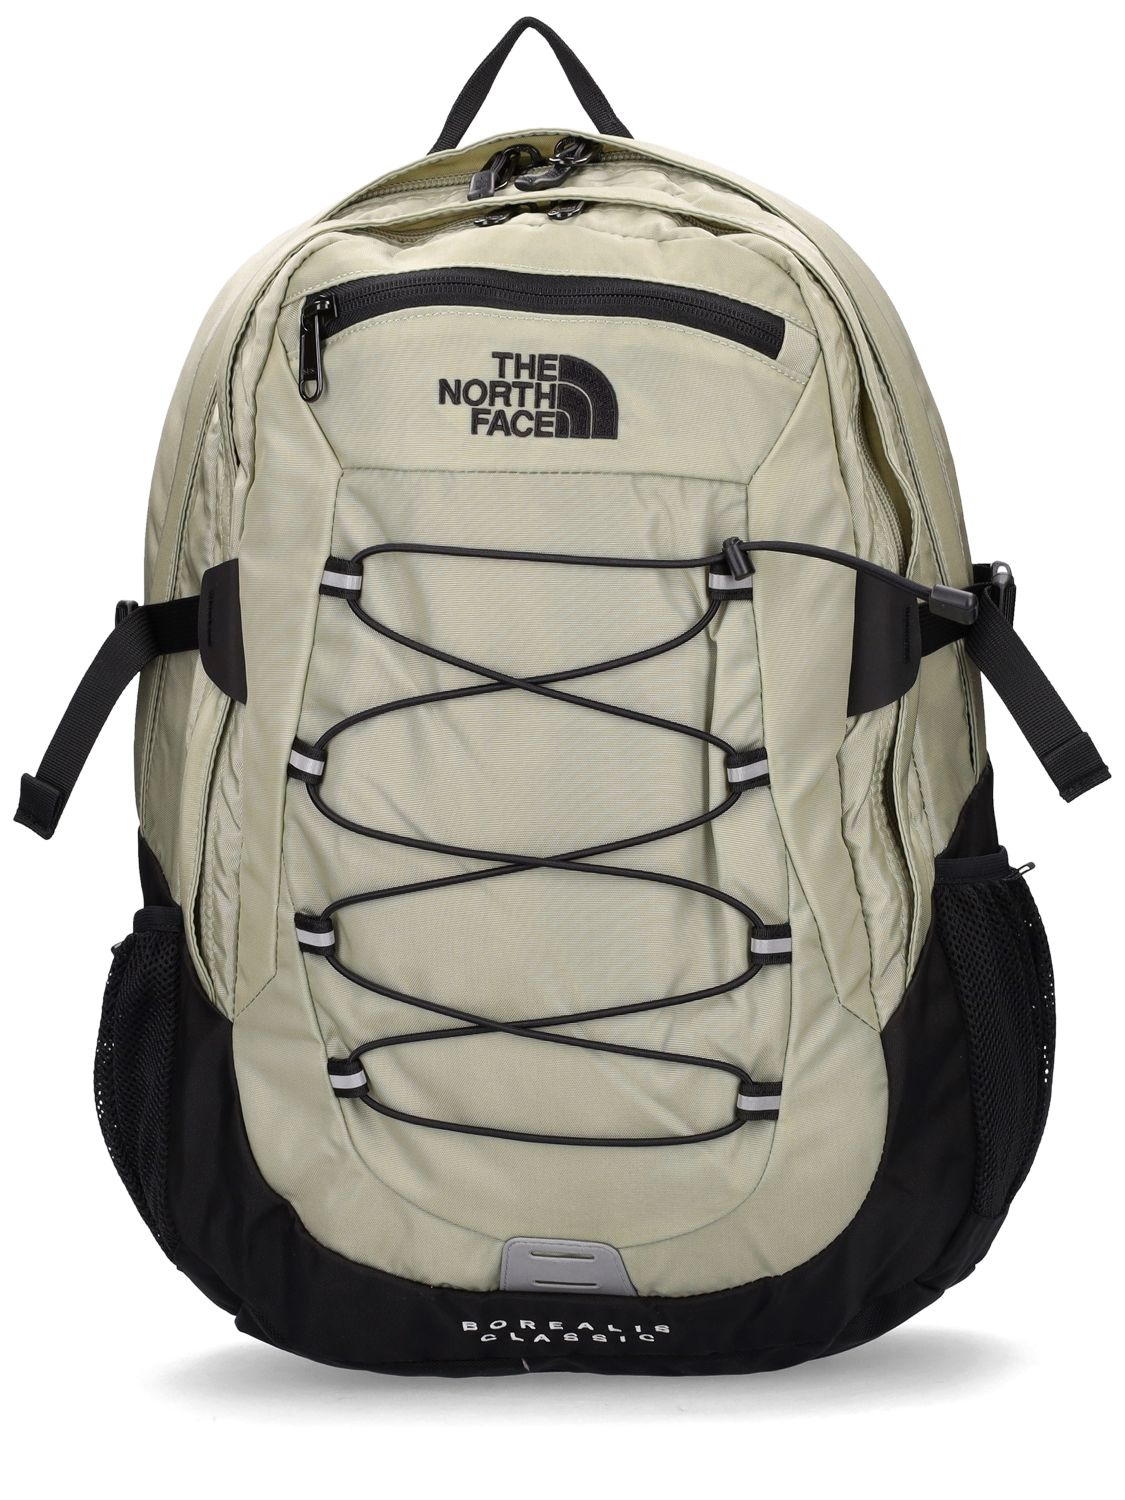 THE NORTH FACE 29l Borealis Classic Nylon Backpack